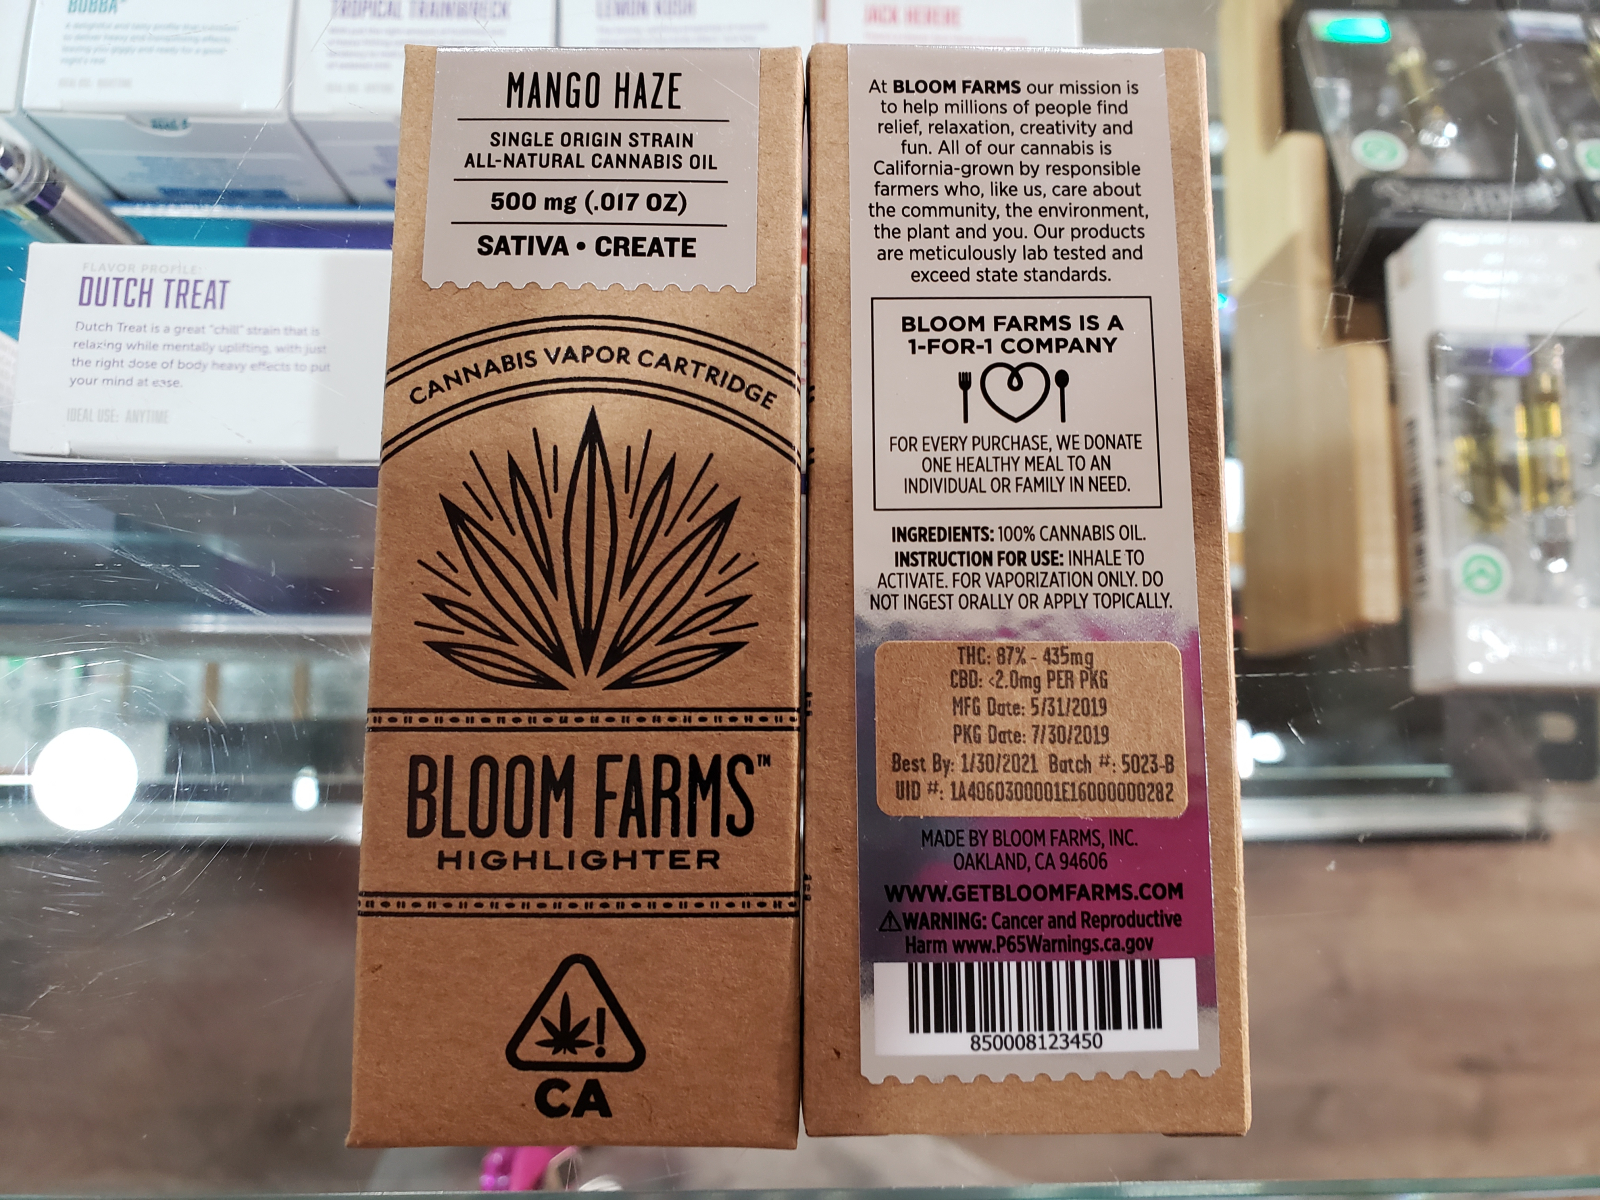 Bloom farms Mango Haze sativa cartridge half gram